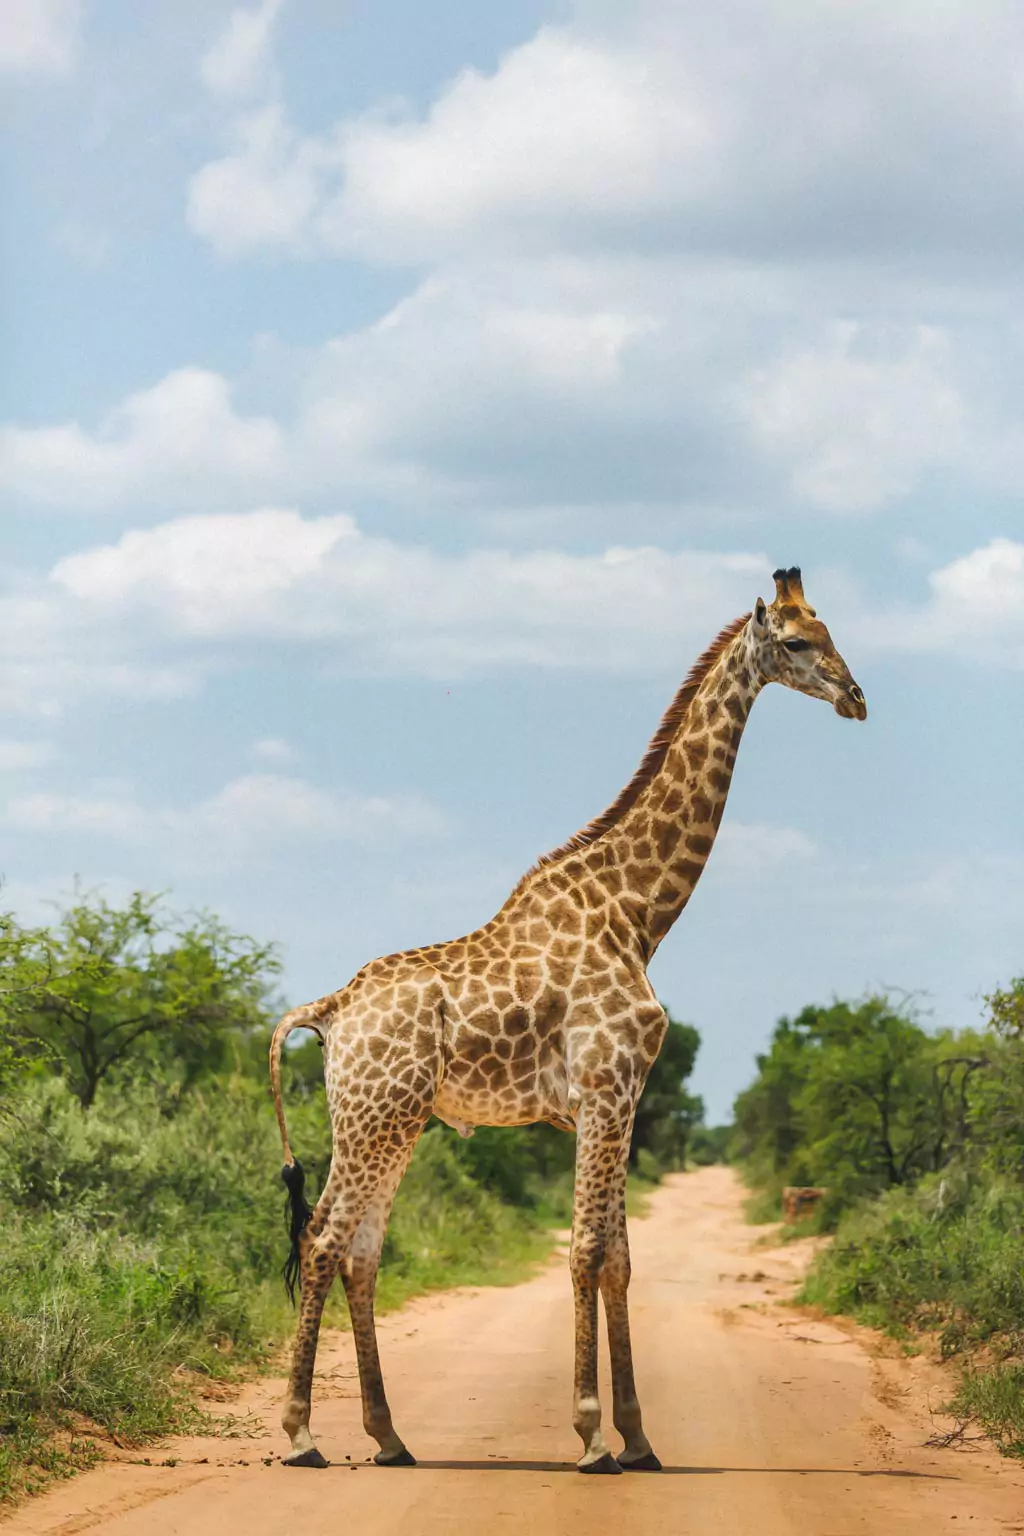 Giraffes in the road